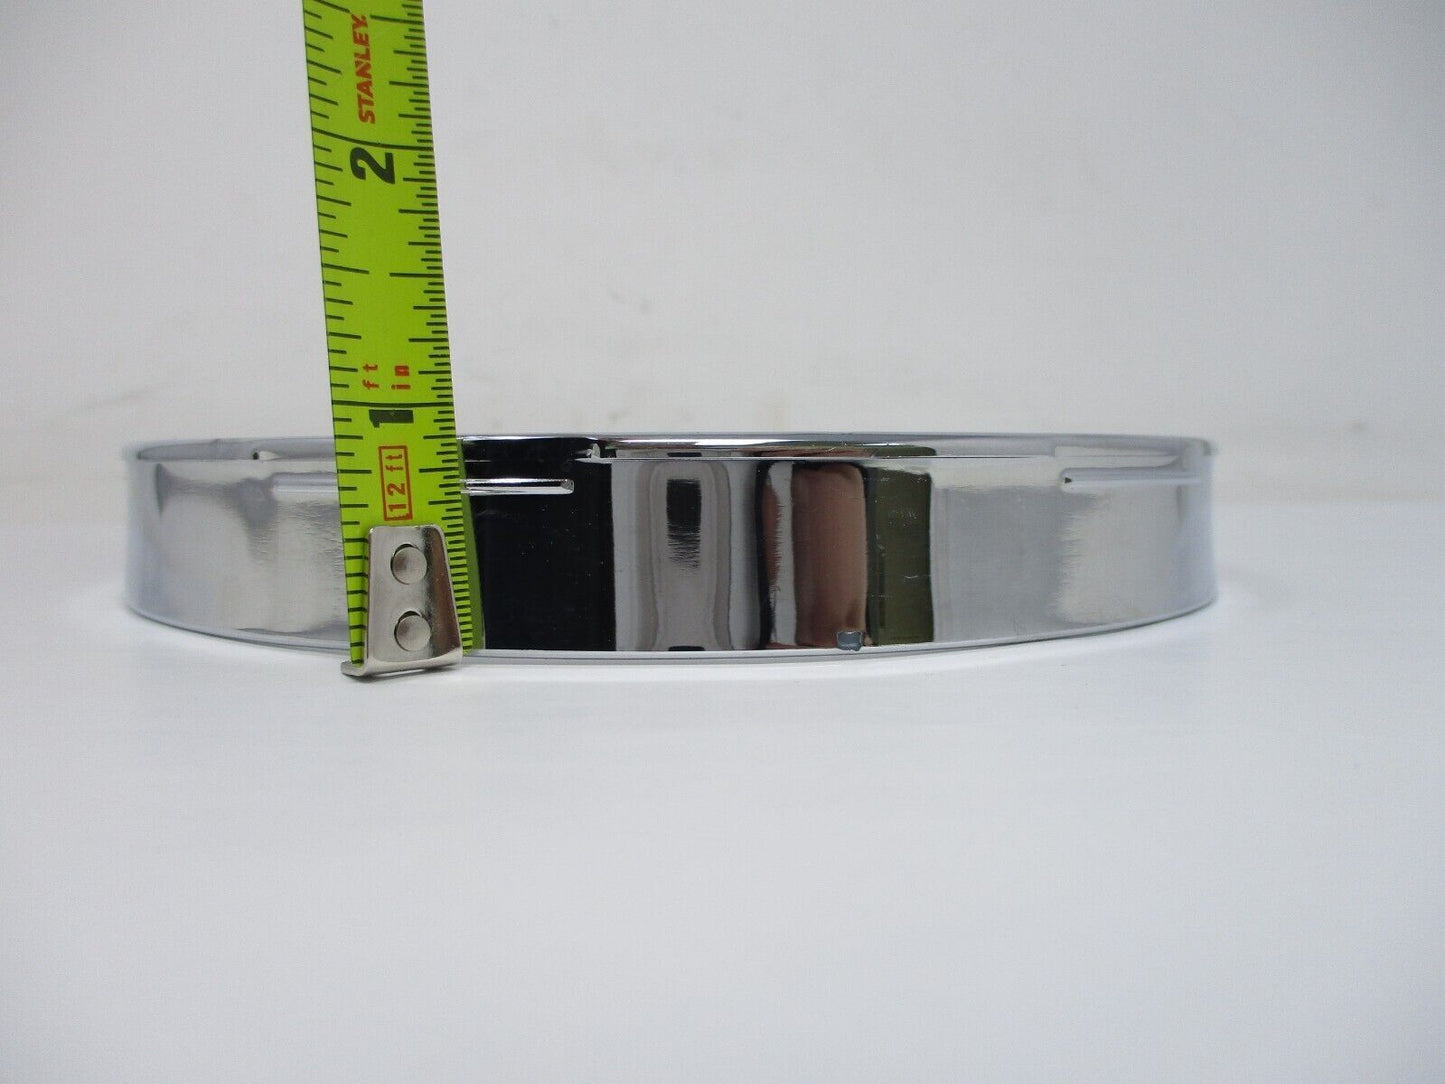 Spacer Ring for 7'' Headlight PFX2231